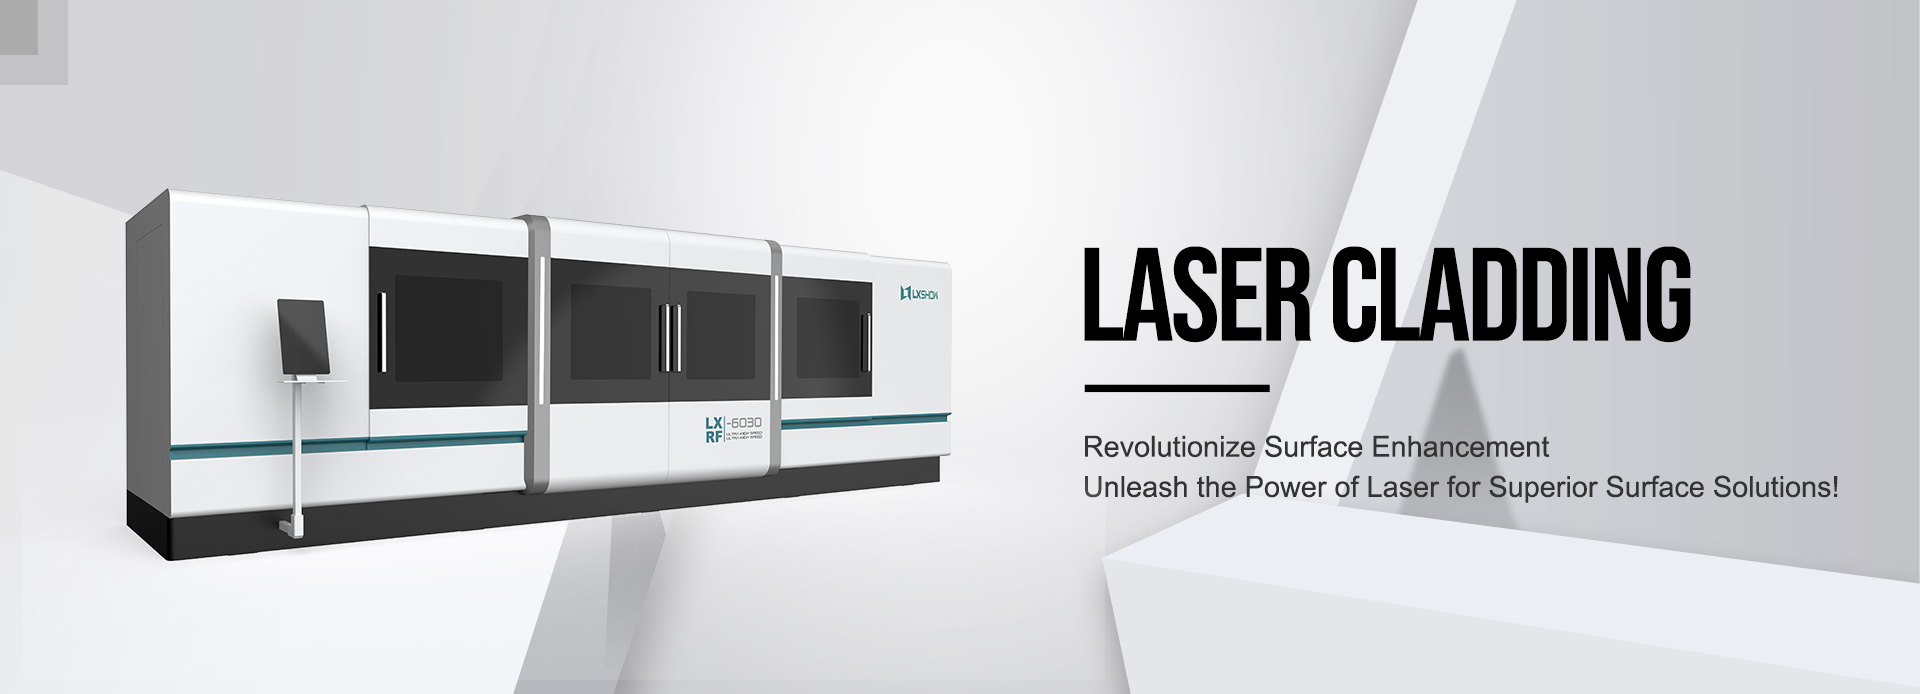 LXRF-6030 Hot-selling enkelassige surround-laserbekledingsmachine voor metaal